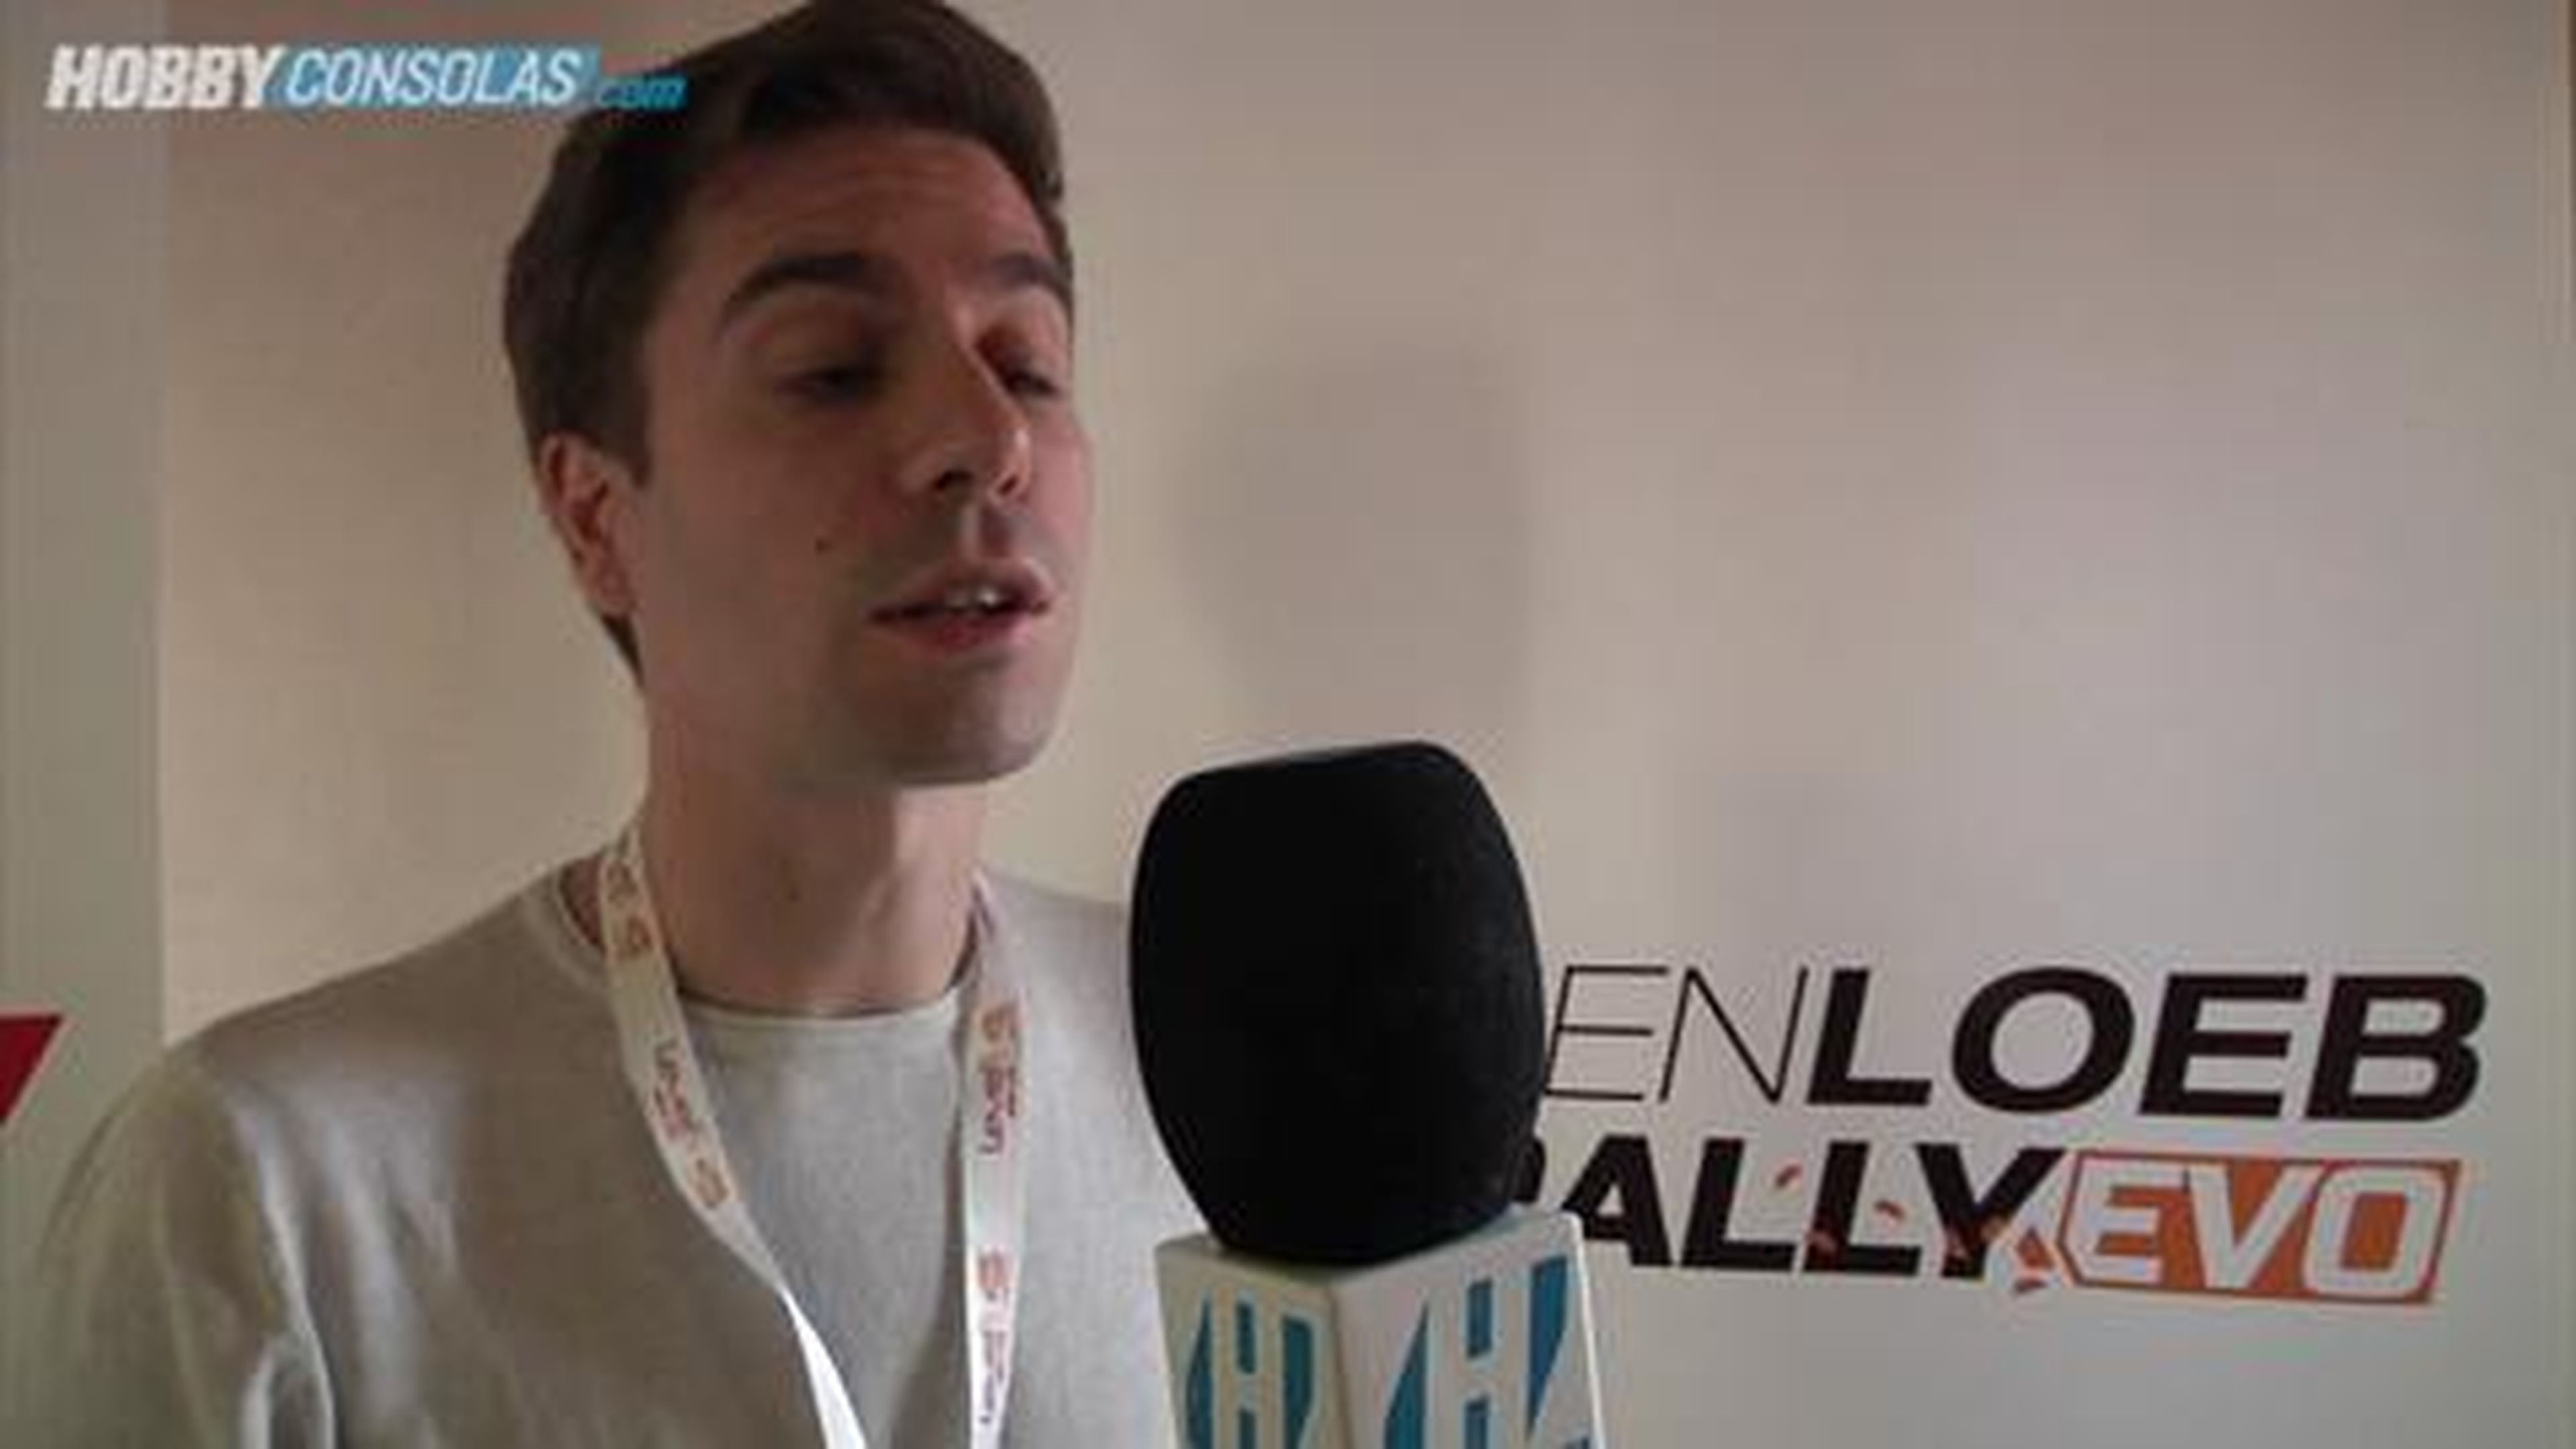 Sebastien Loeb Rally Evo - Entrevista